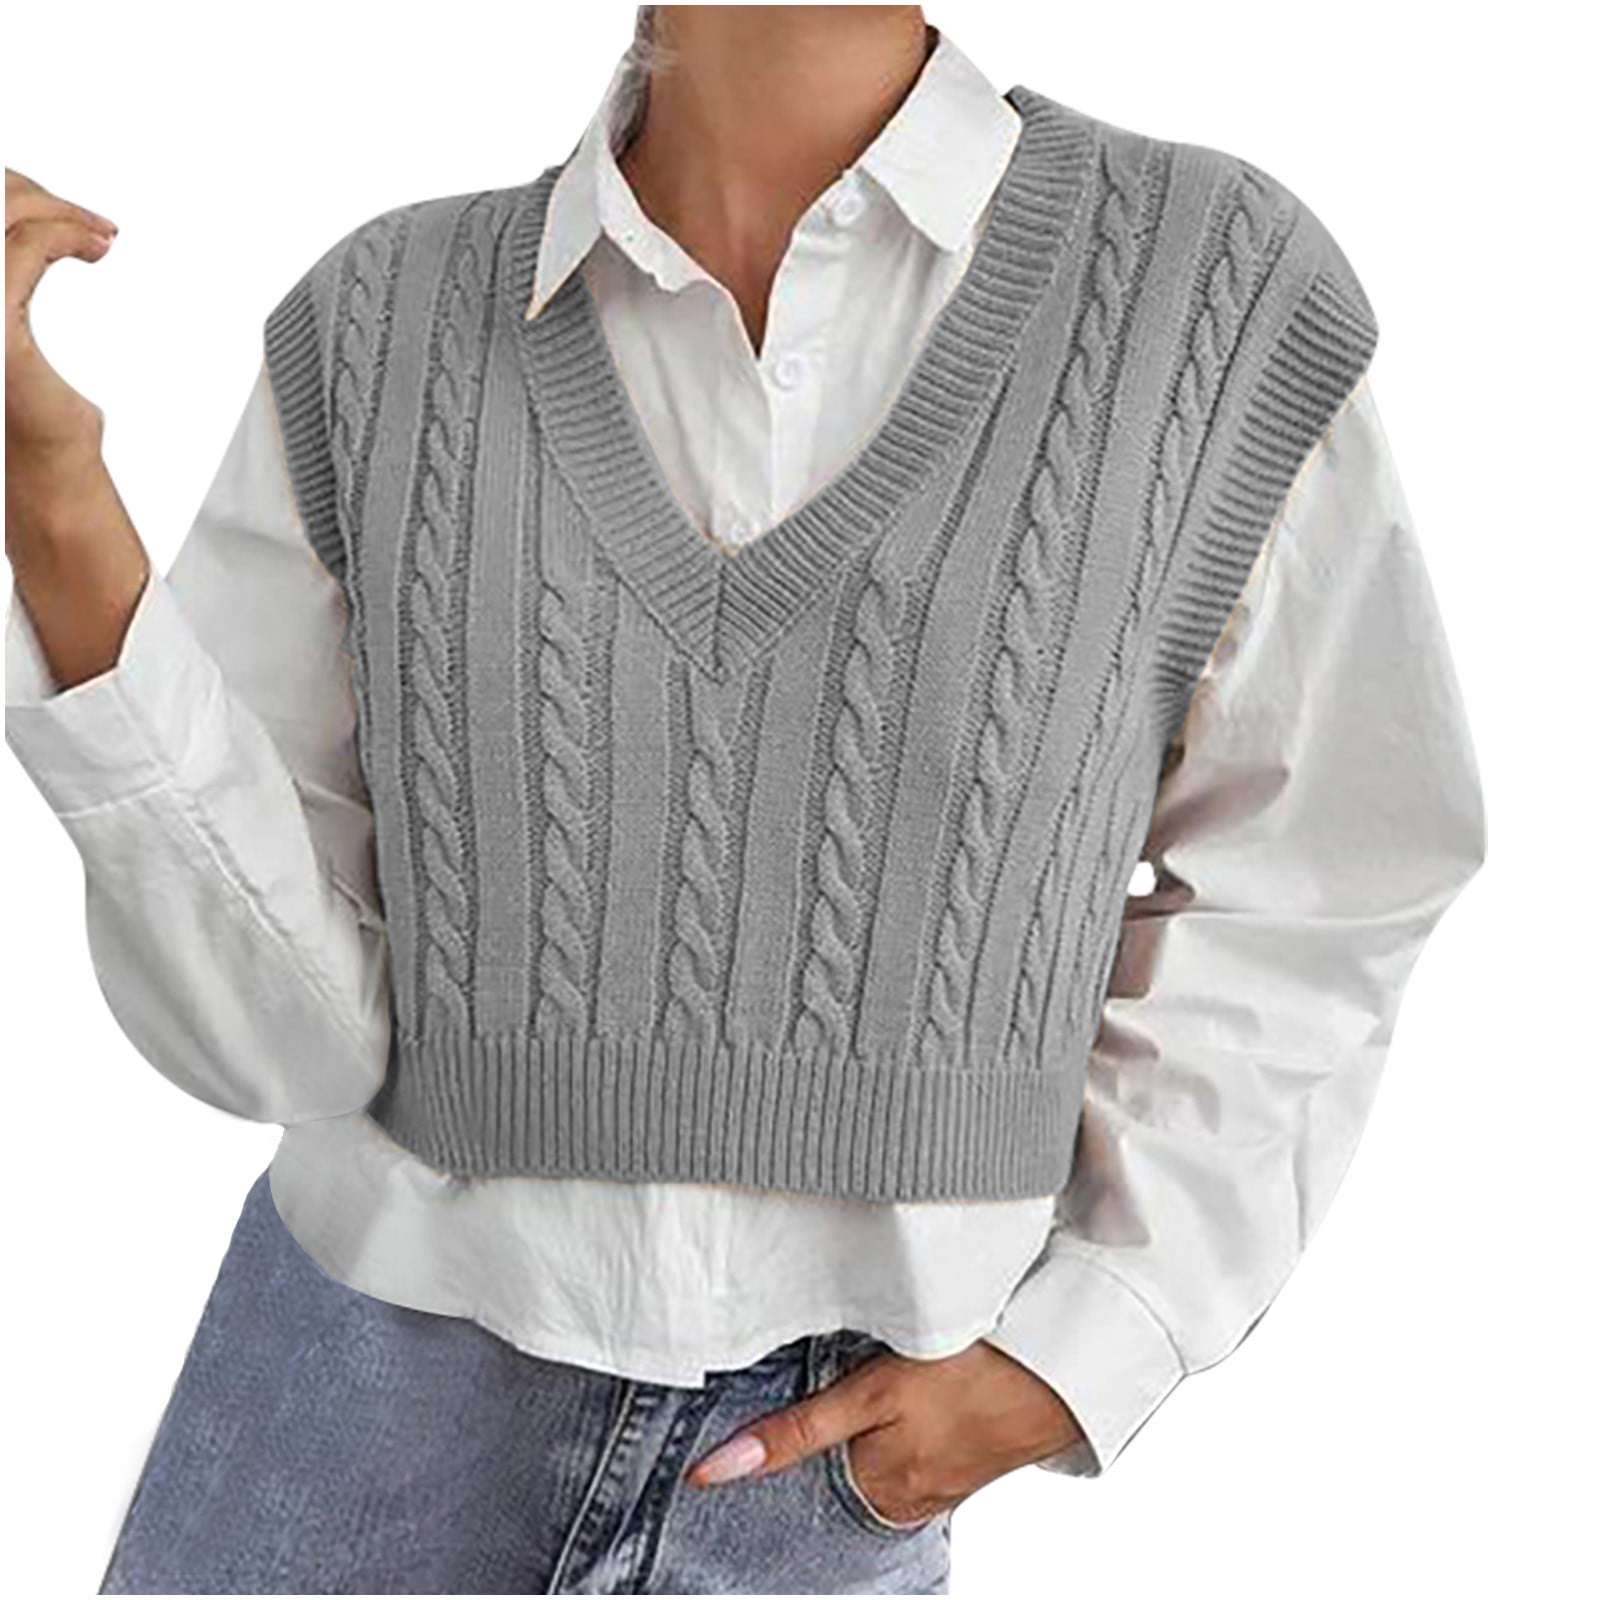 Sleeveless Vest Sweater Women Pullover Casual V Neck Knitted